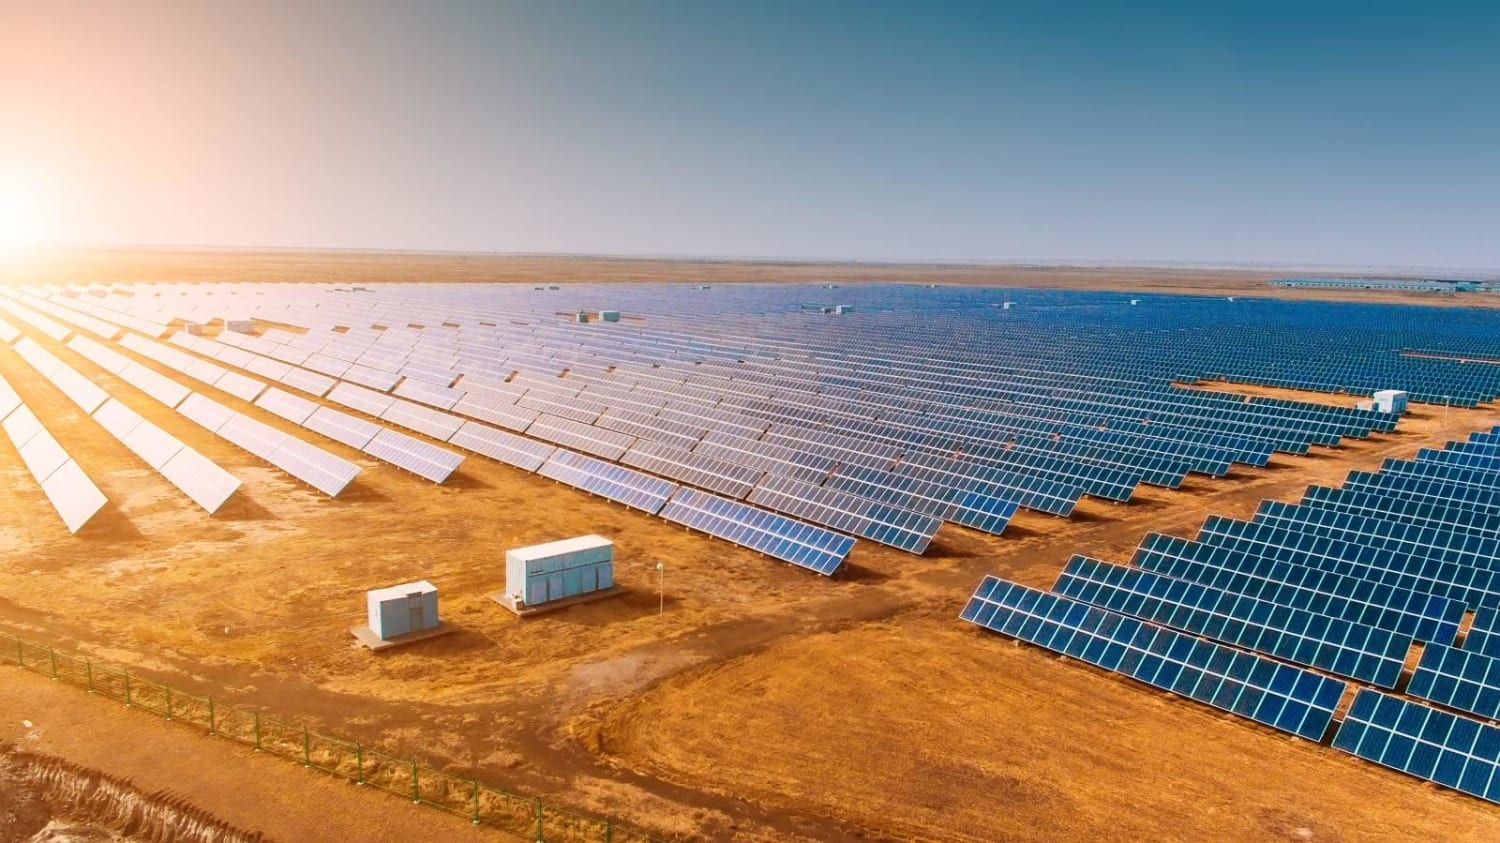 Facebook is financing a massive solar farm in Texas